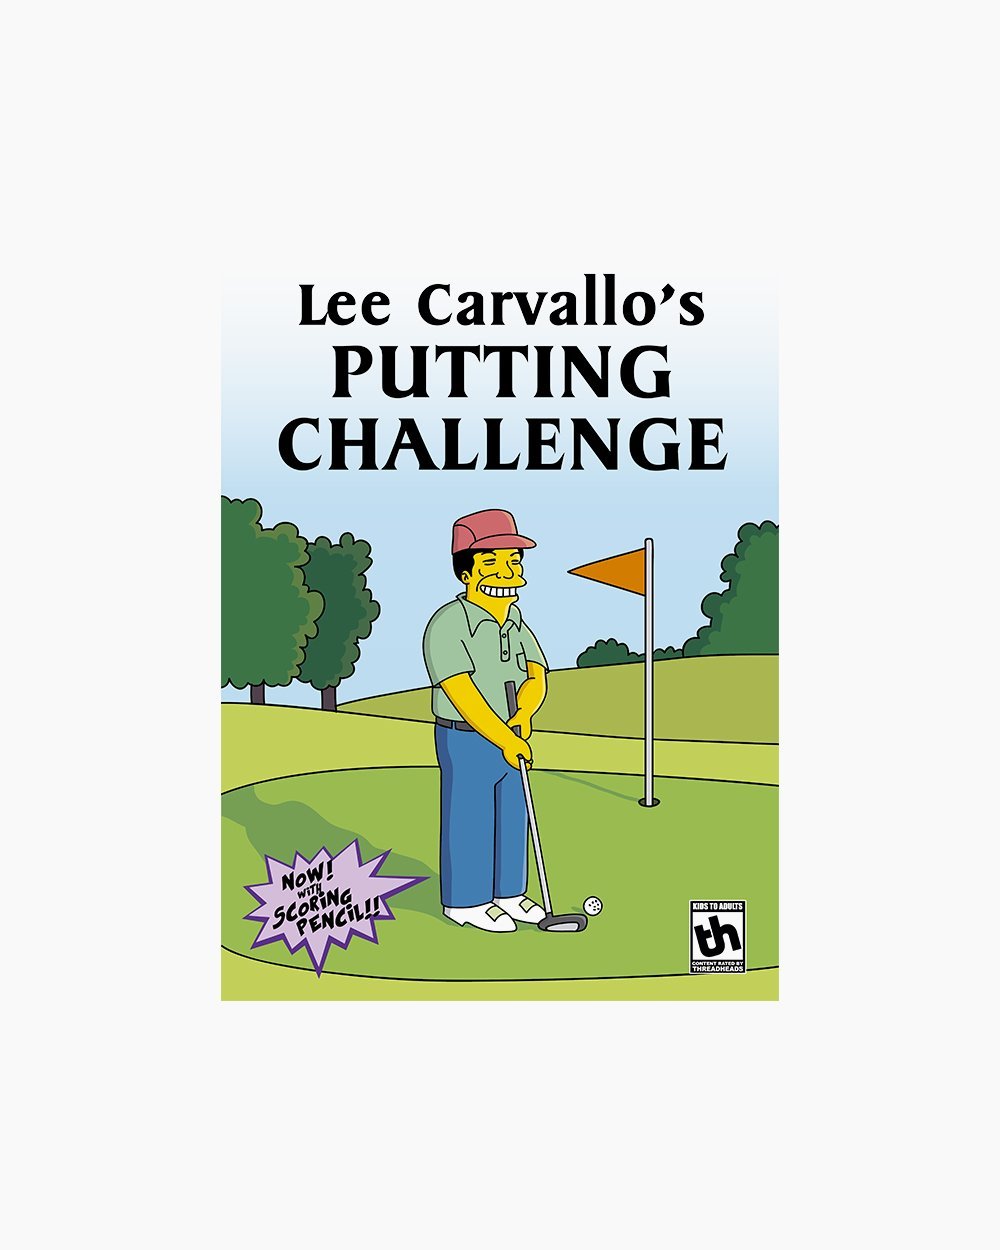 Lee Carvallo's Putting Challenge T-Shirt Australia Online #colour_white